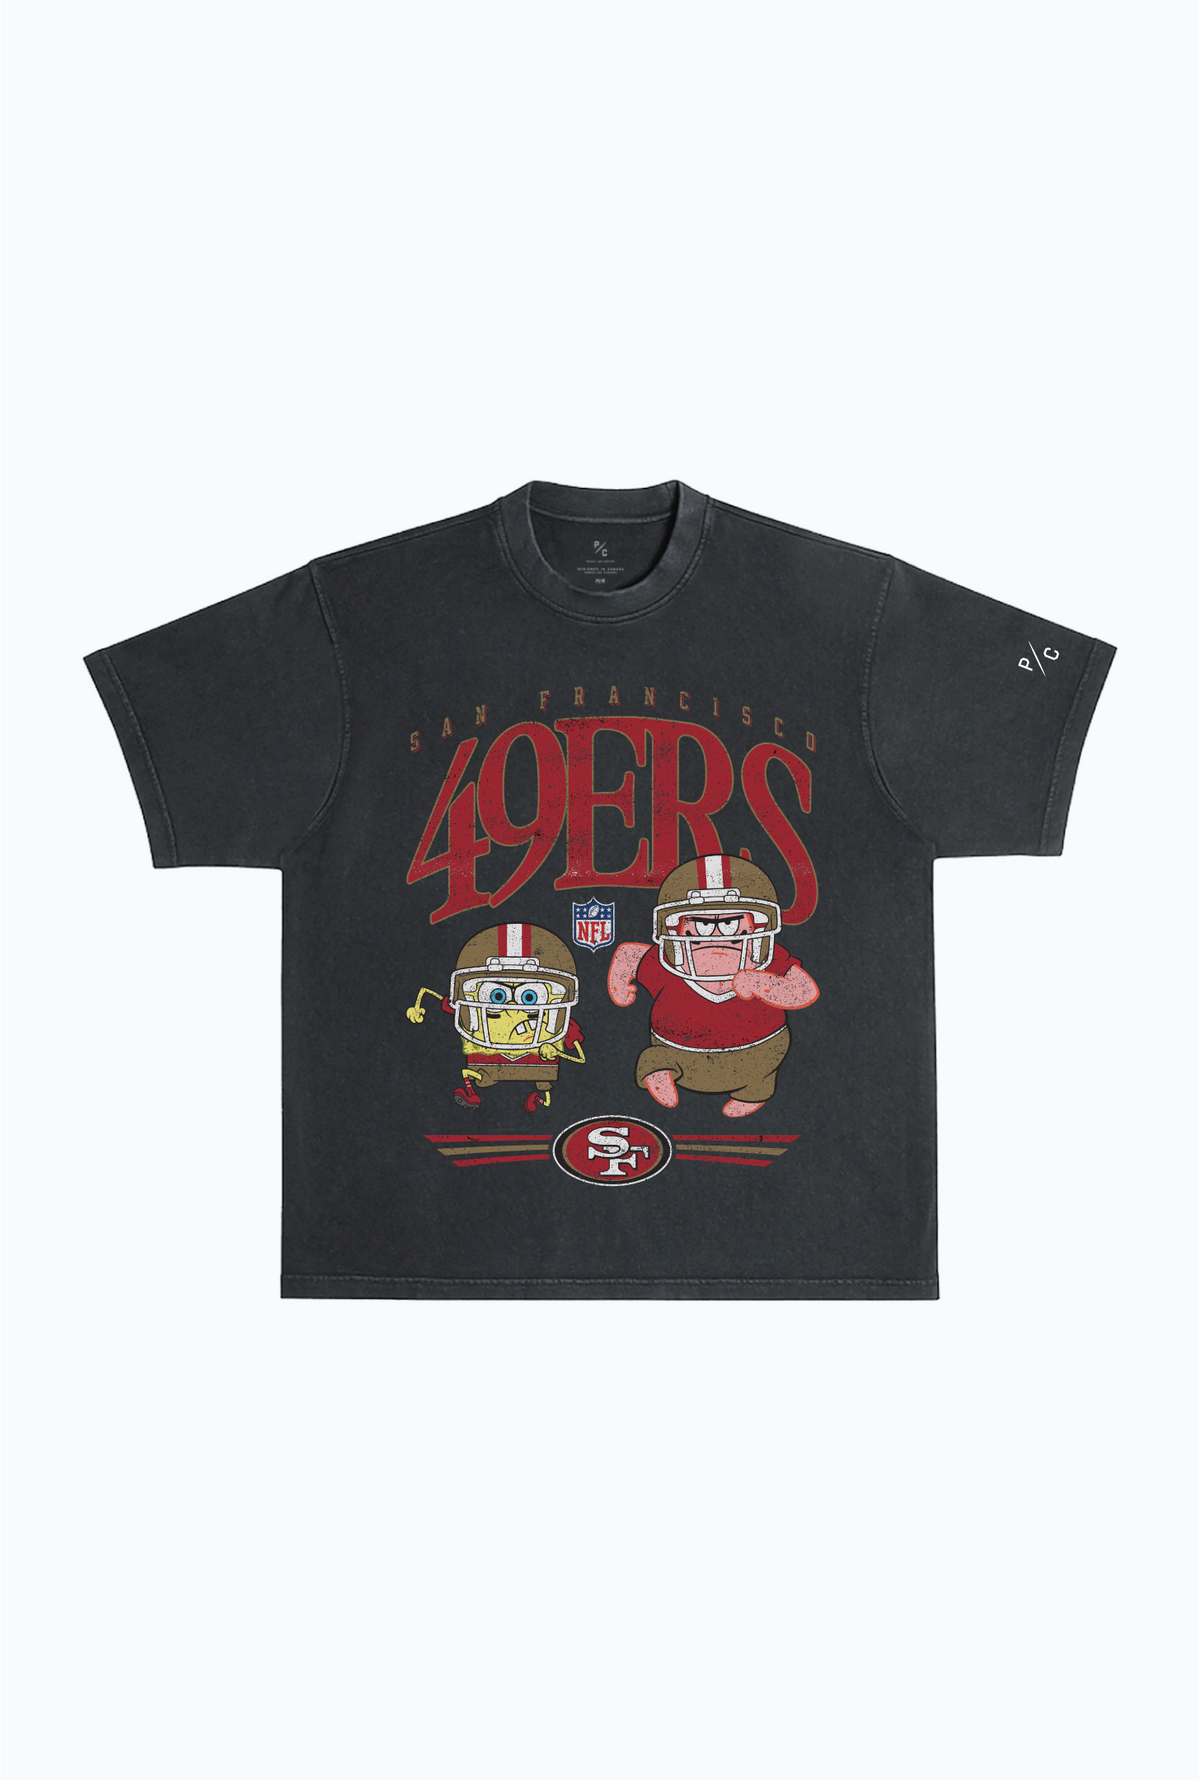 Spongebob & Patrick Rush Heavy Pigment Dye T-Shirt - San Francisco 49ers